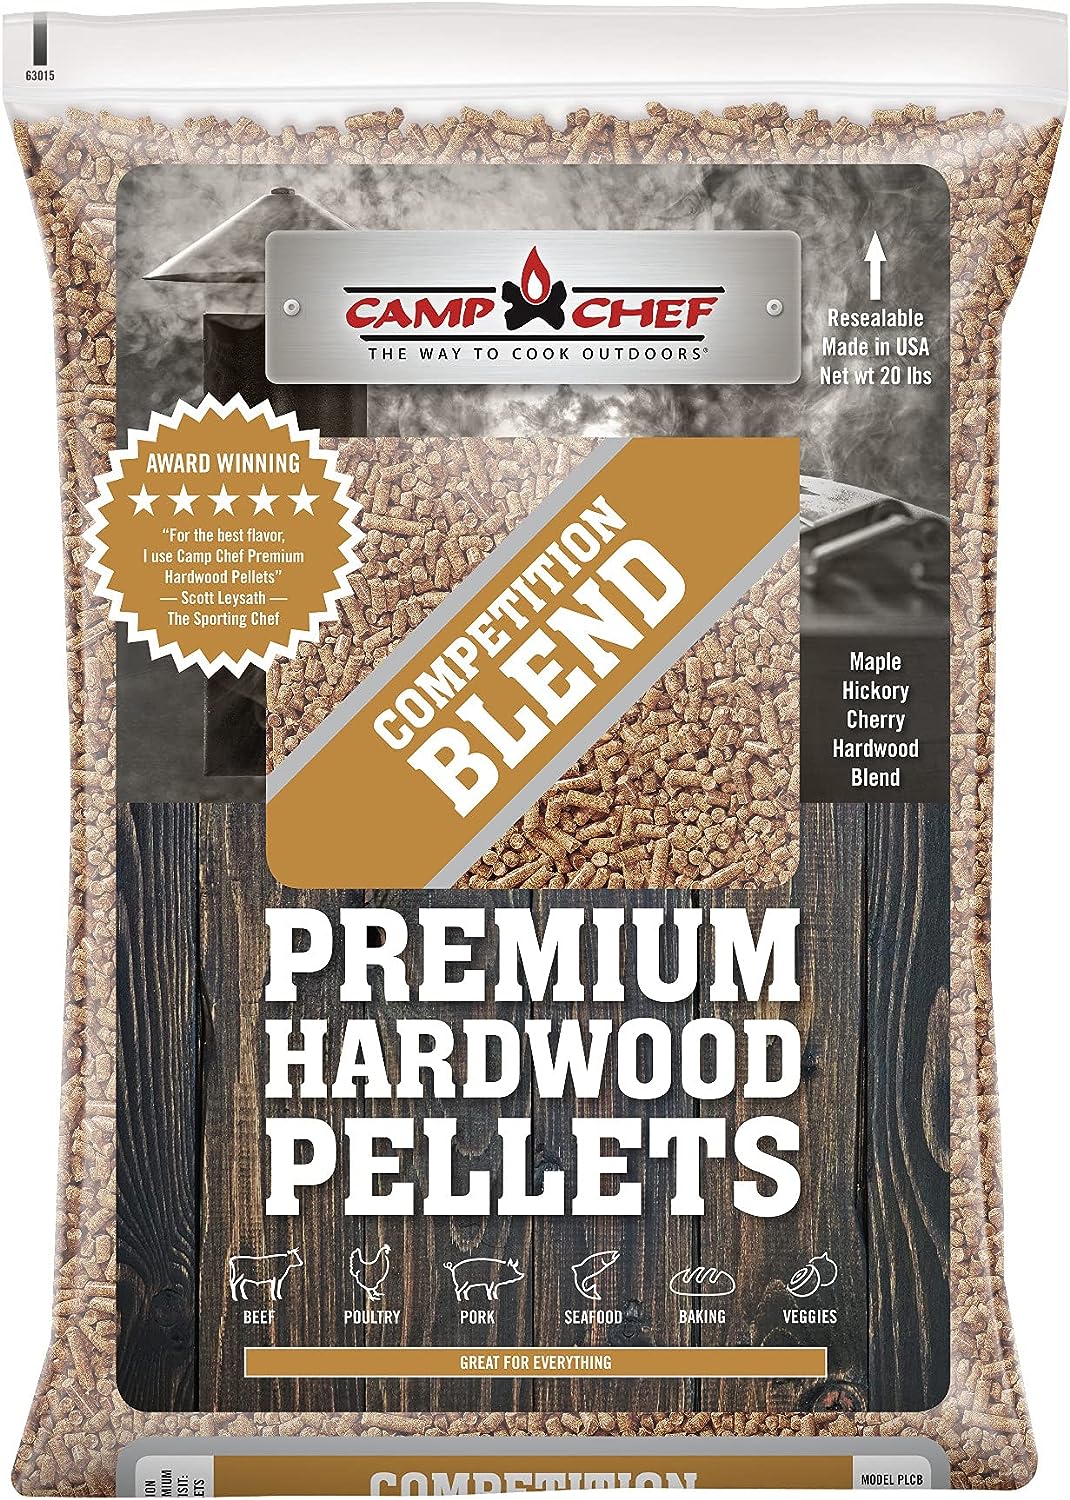 hardwood pellets detailed review